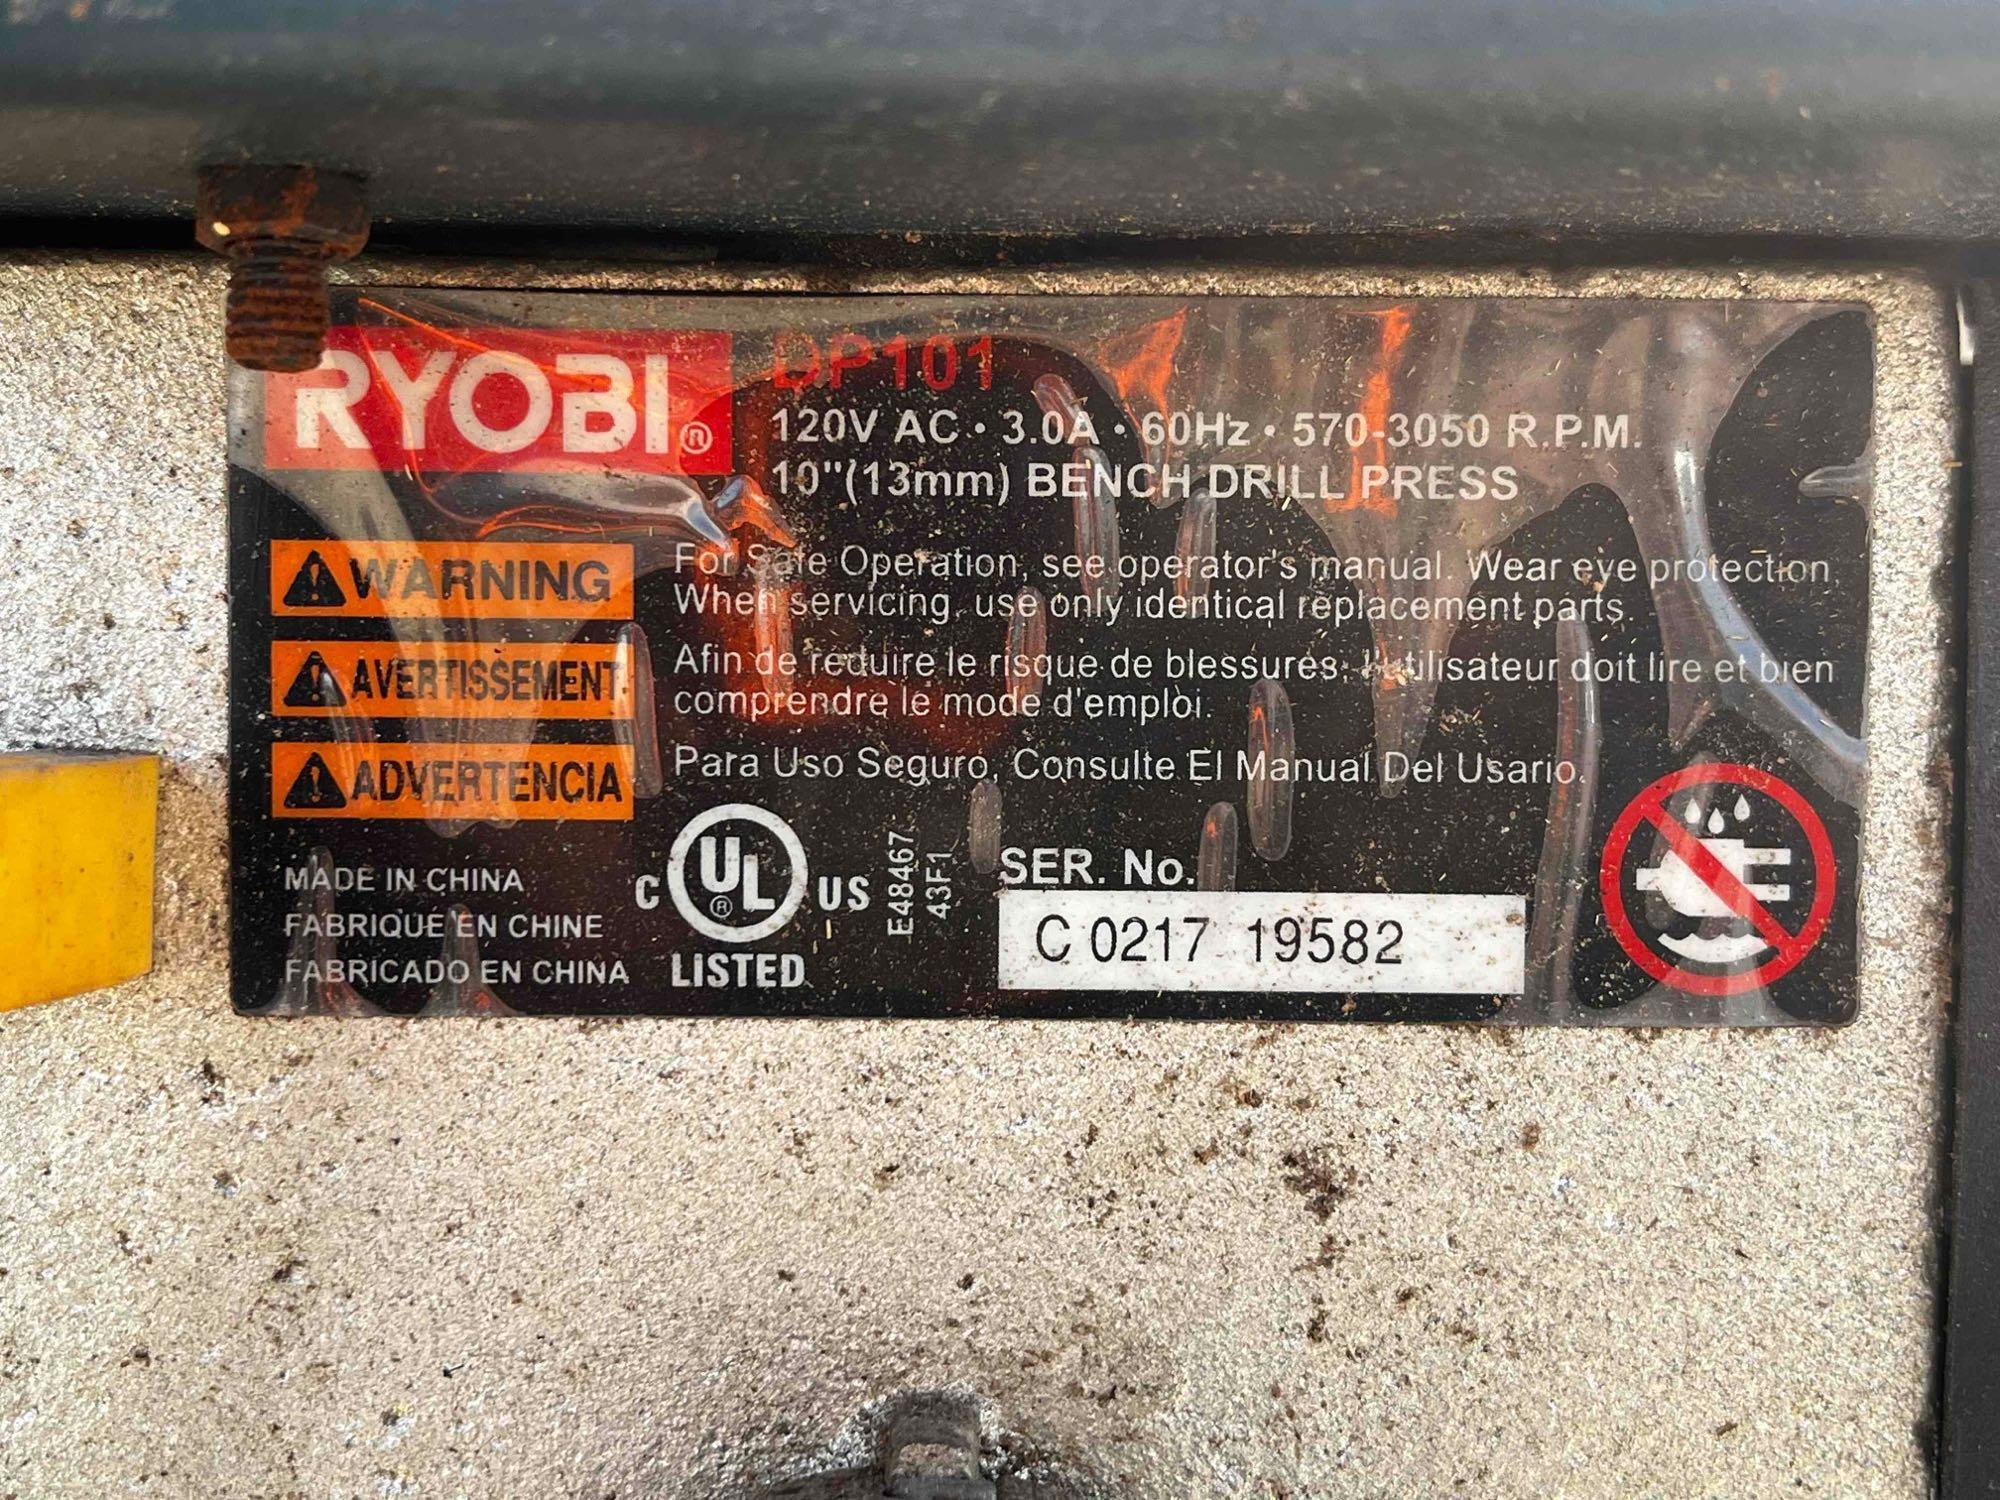 Ryobi DP101 10 Inch Drill Press